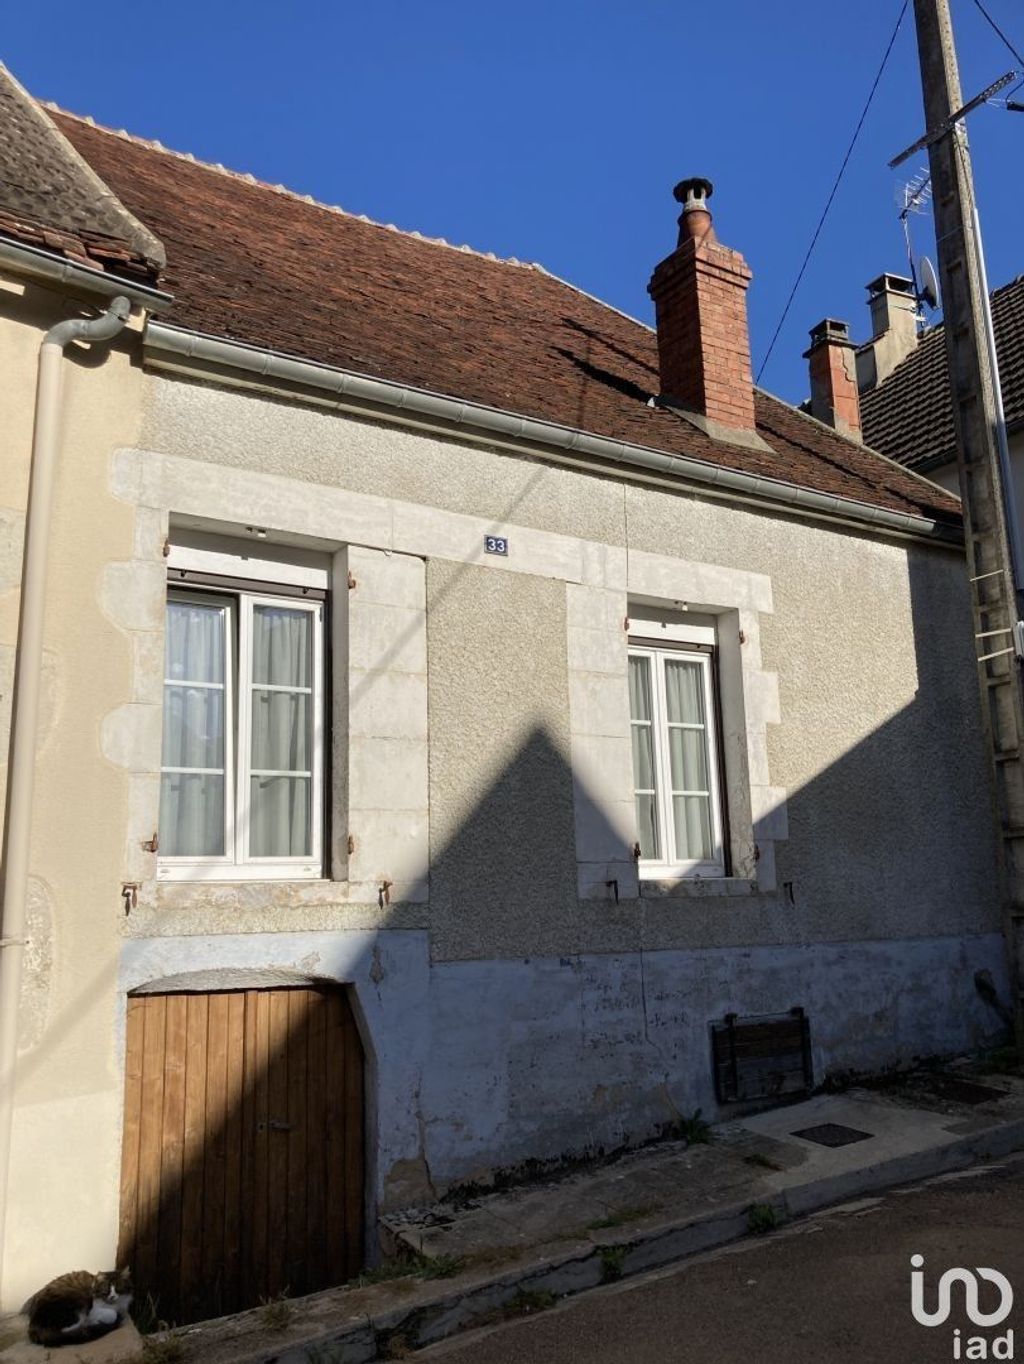 Achat maison à vendre 2 chambres 50 m² - Sainte-Pallaye